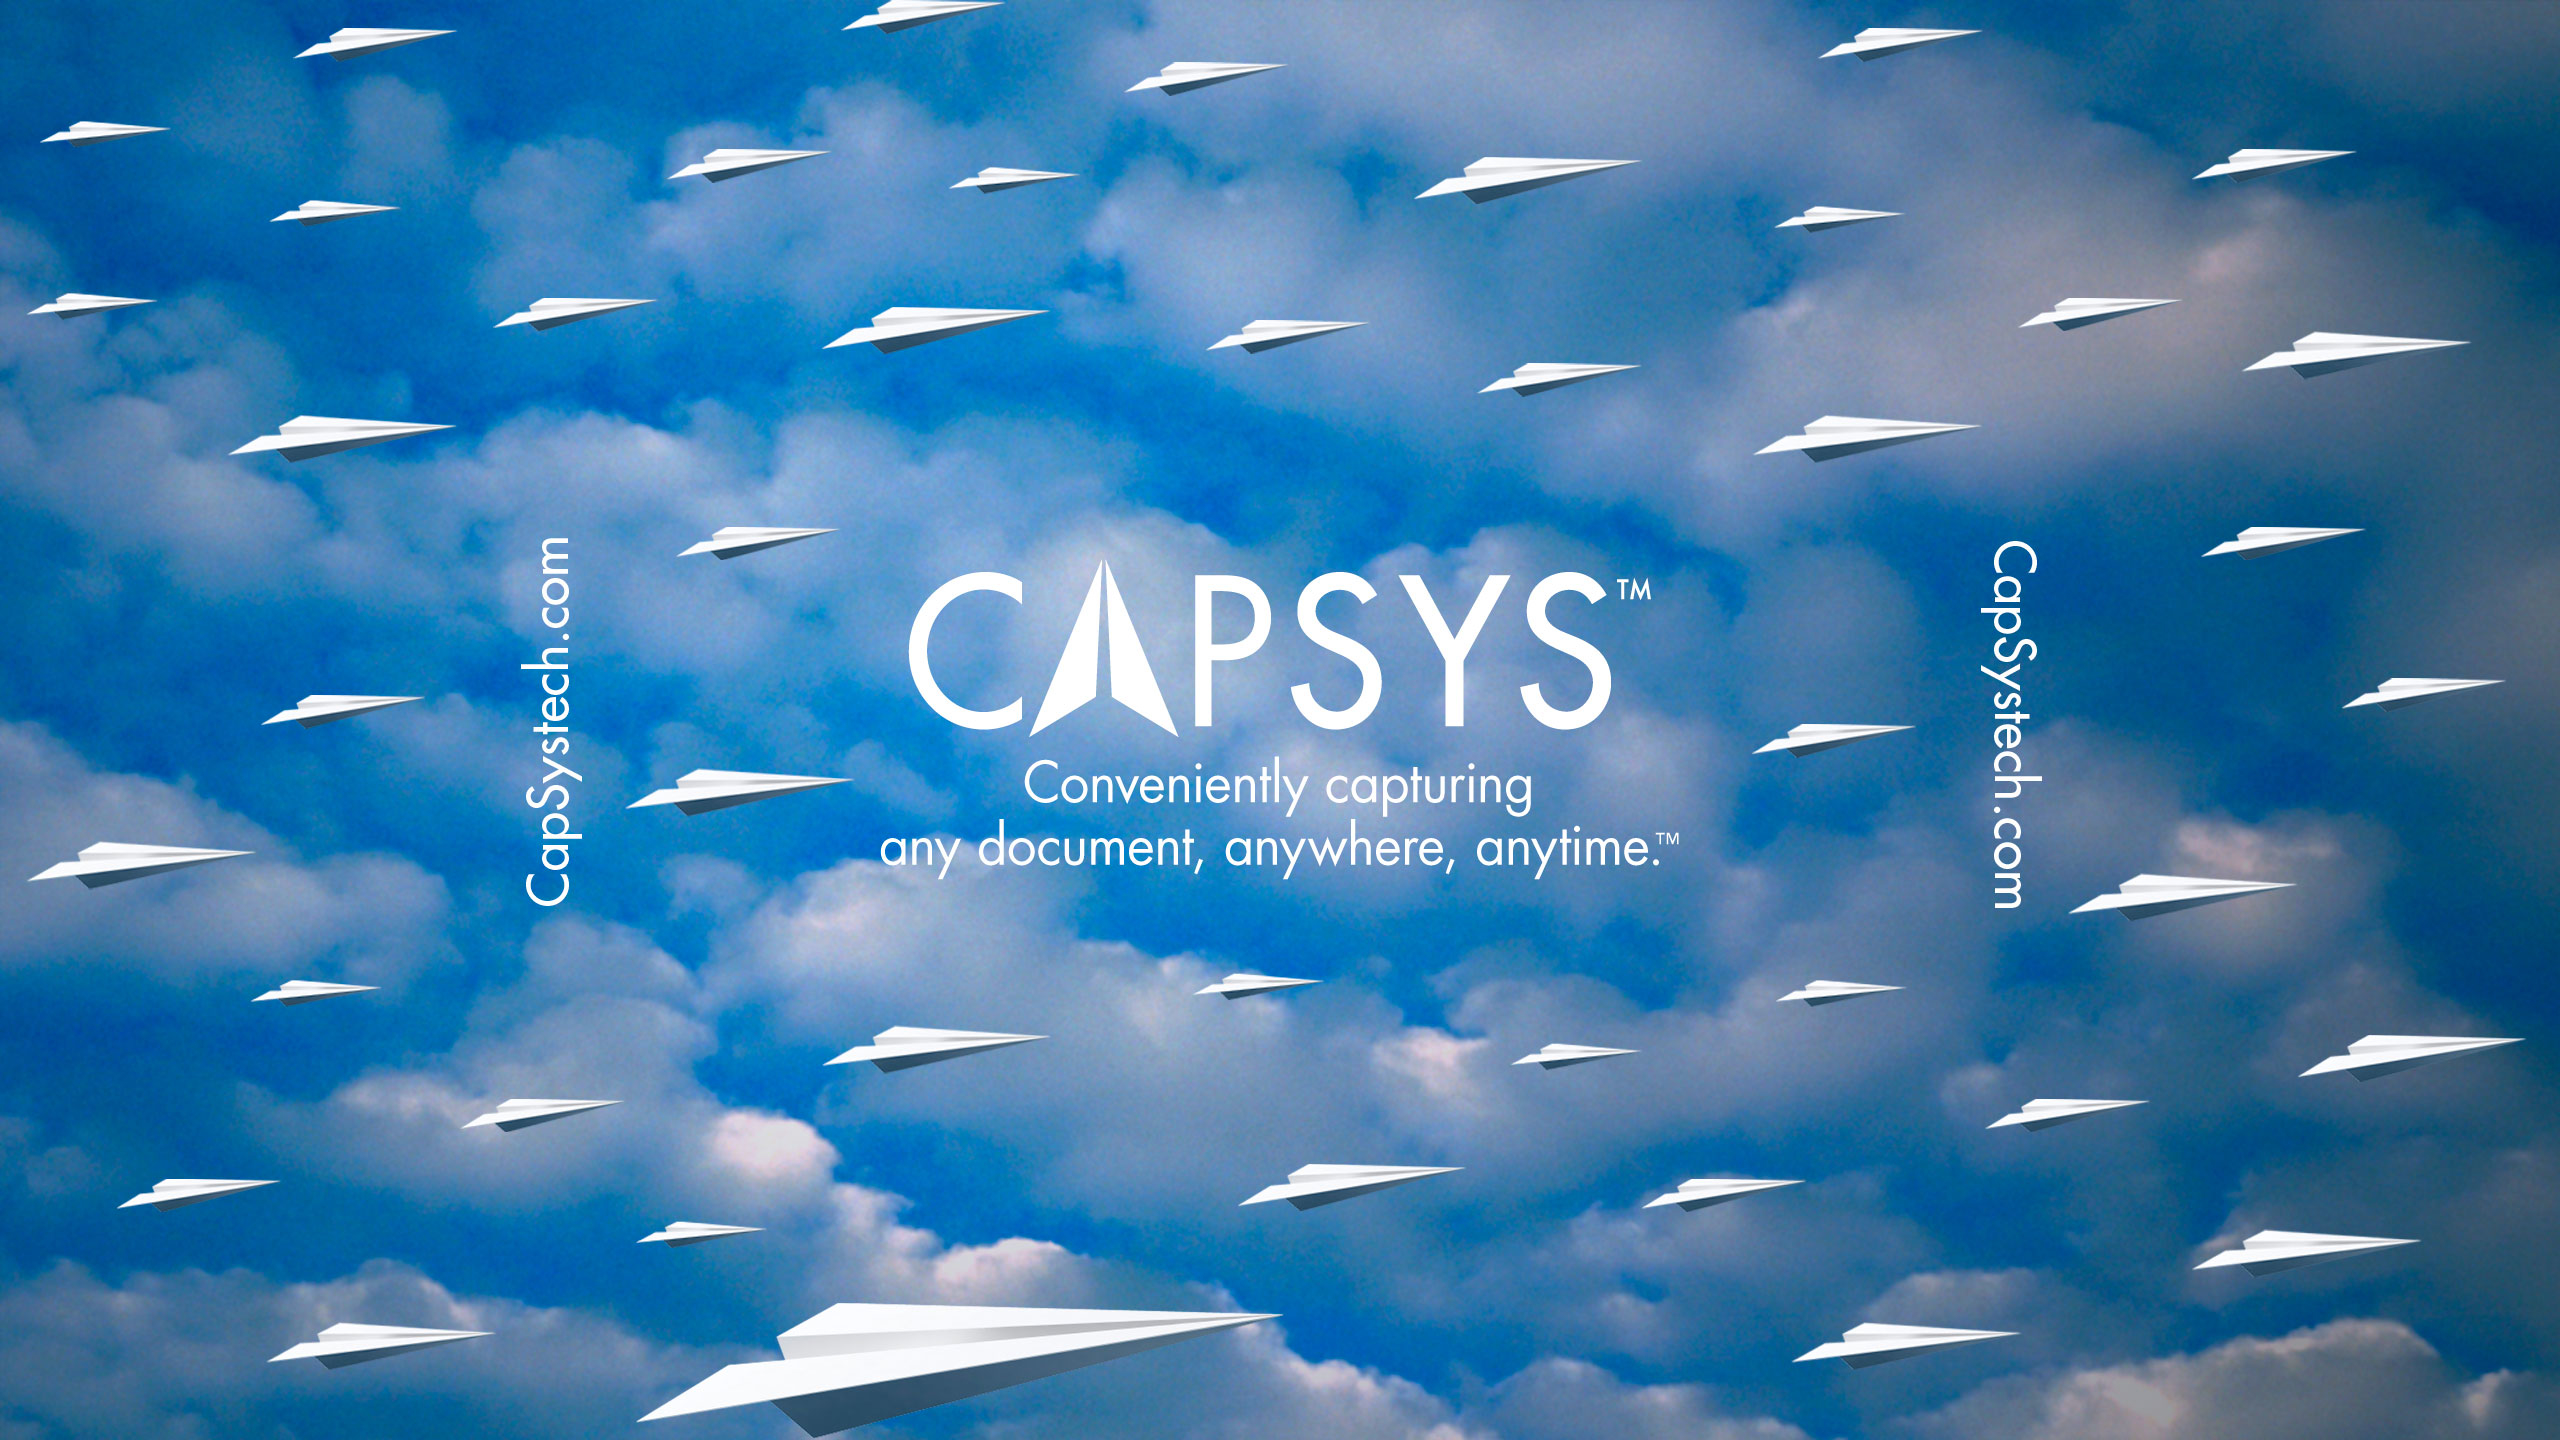 capsys technologies Photo